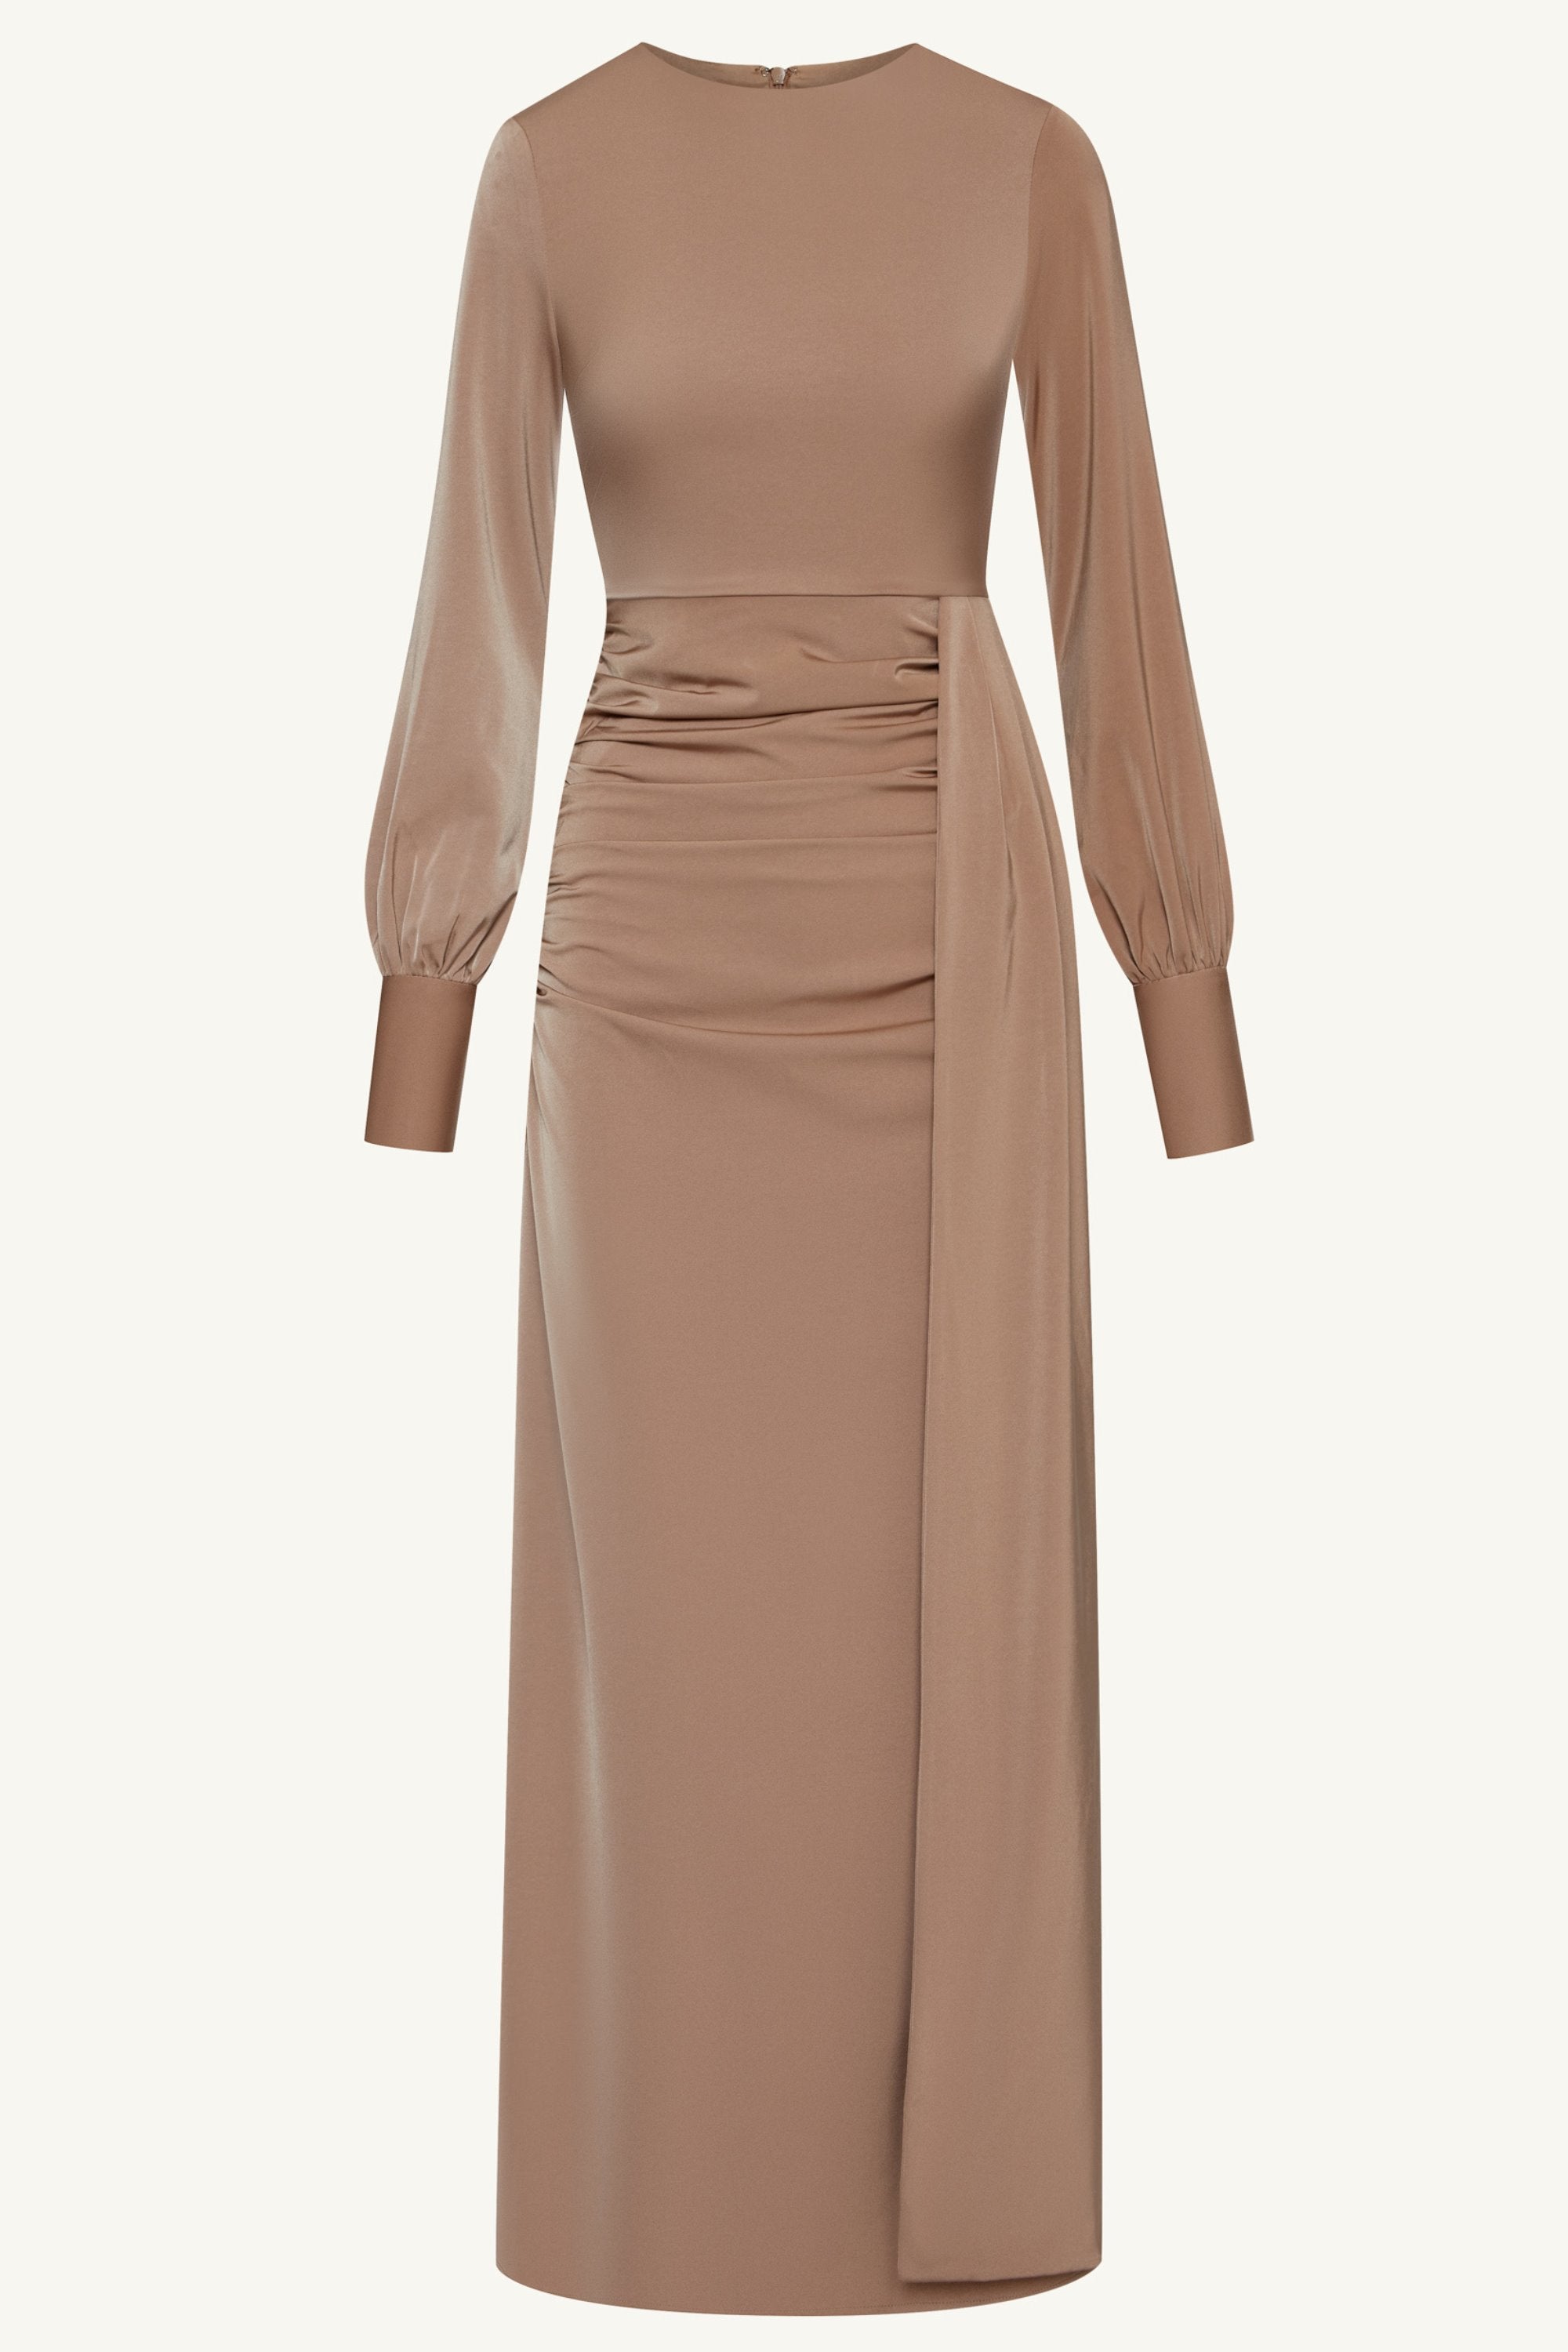 Laylani Satin Rouched Maxi Dress - Taupe Clothing Veiled 